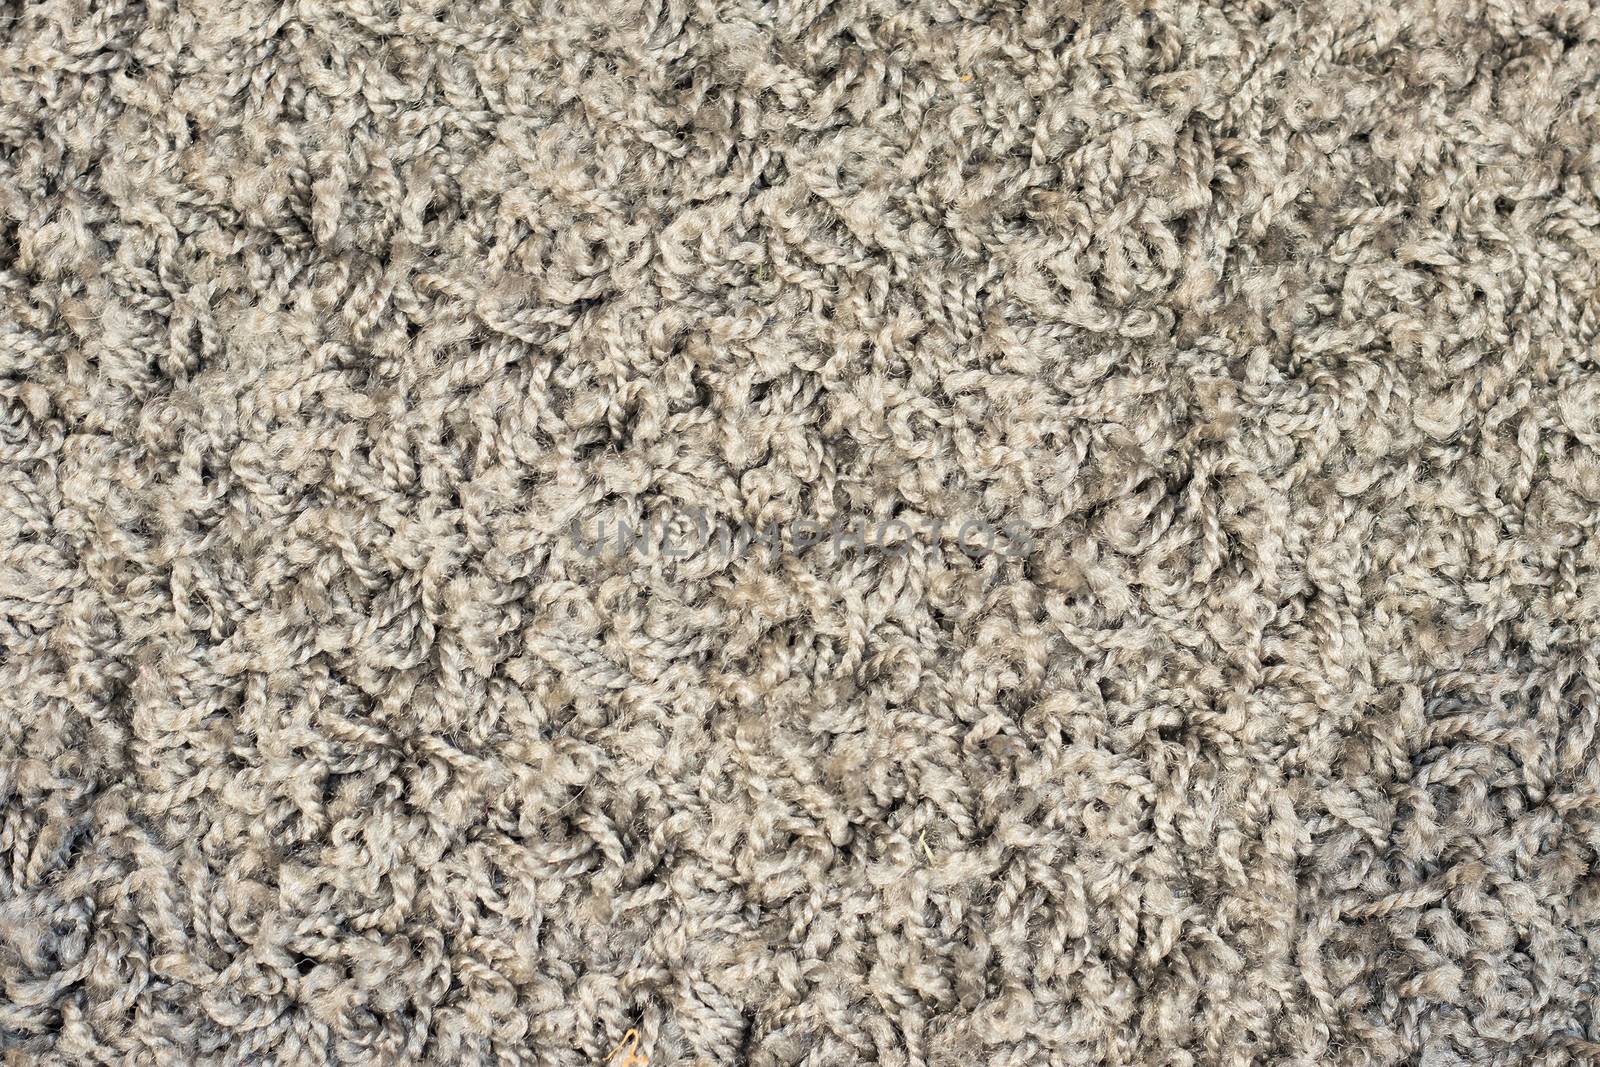 Carpet pattern by noimagination